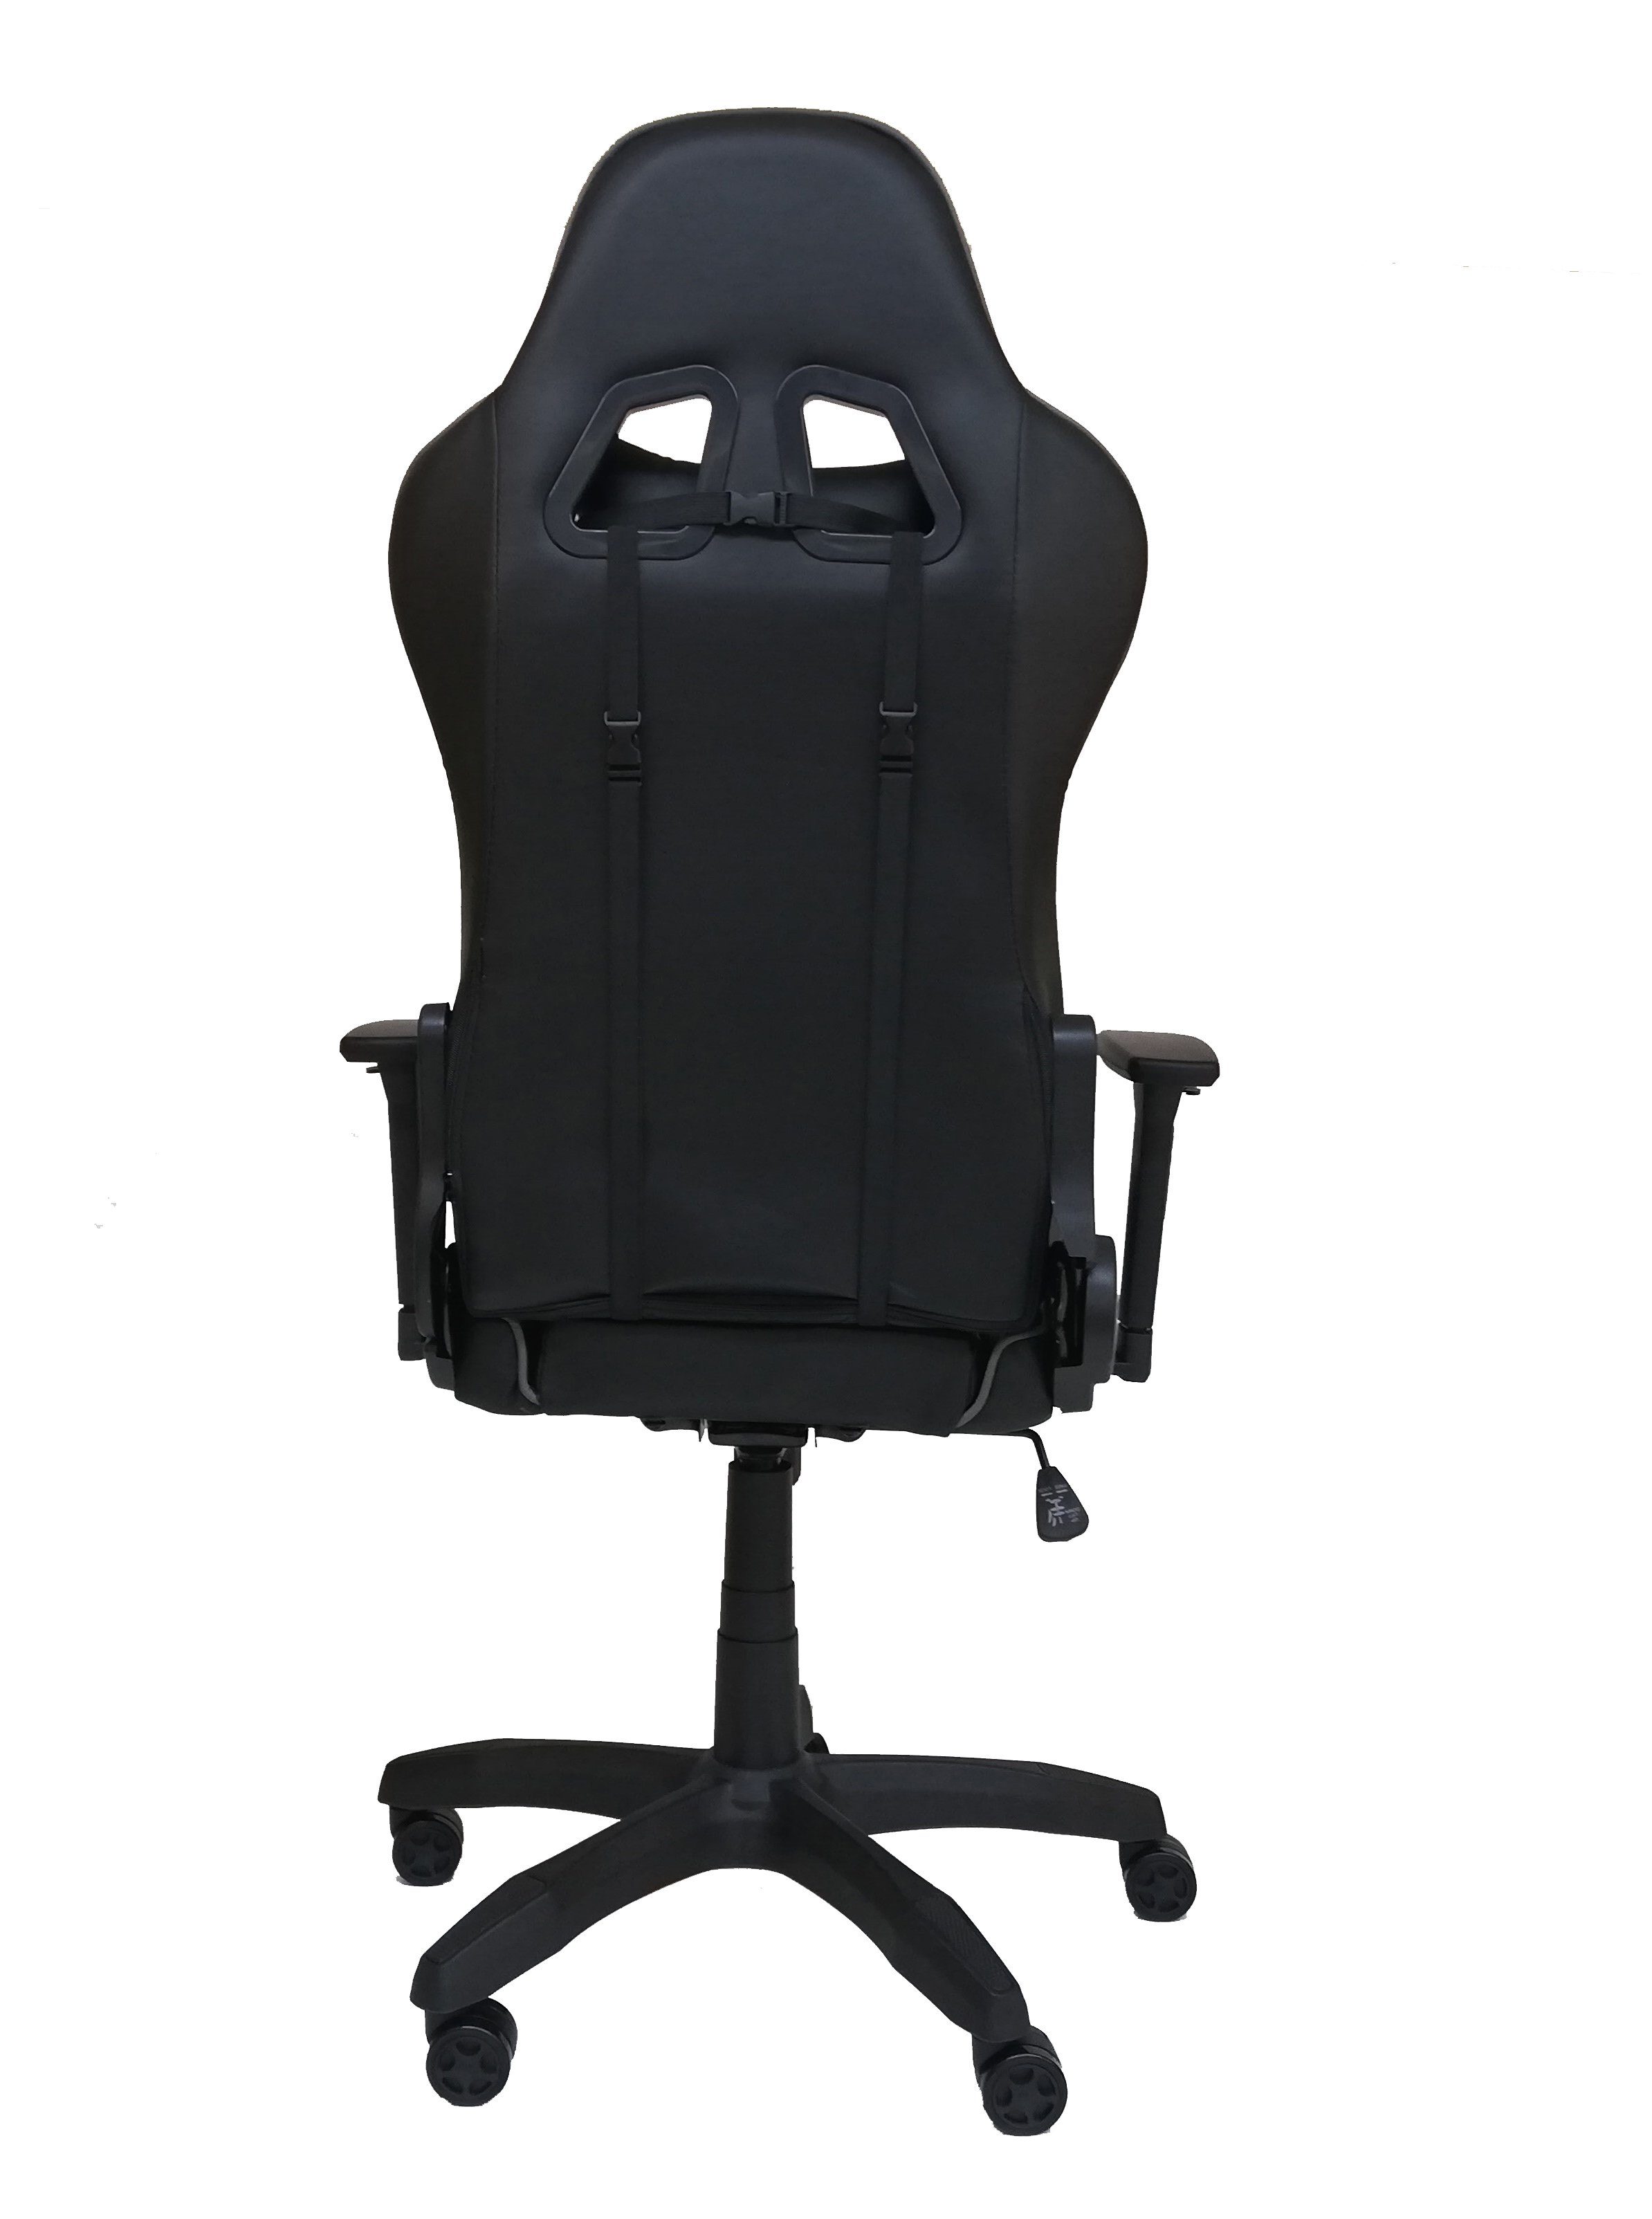 Hyrican Gaming-Stuhl Striker Gaming-Stuhl "Comander" Gamingstuhl, ergonomischer 3D-Armlehnen